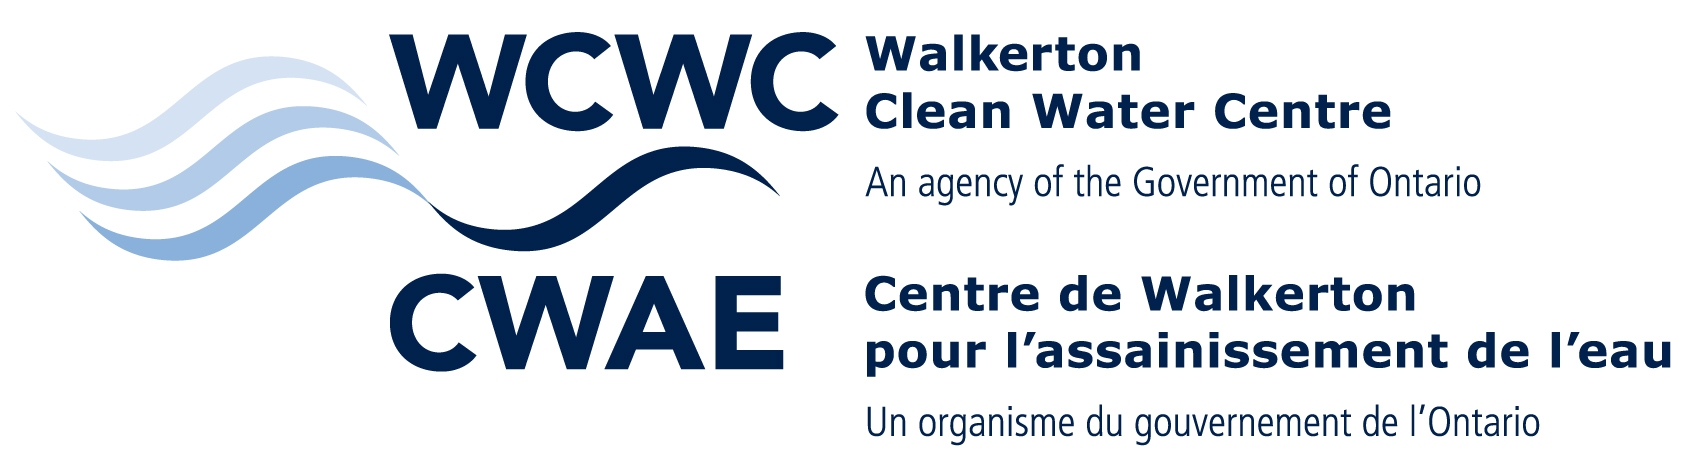 Logo of WCWC